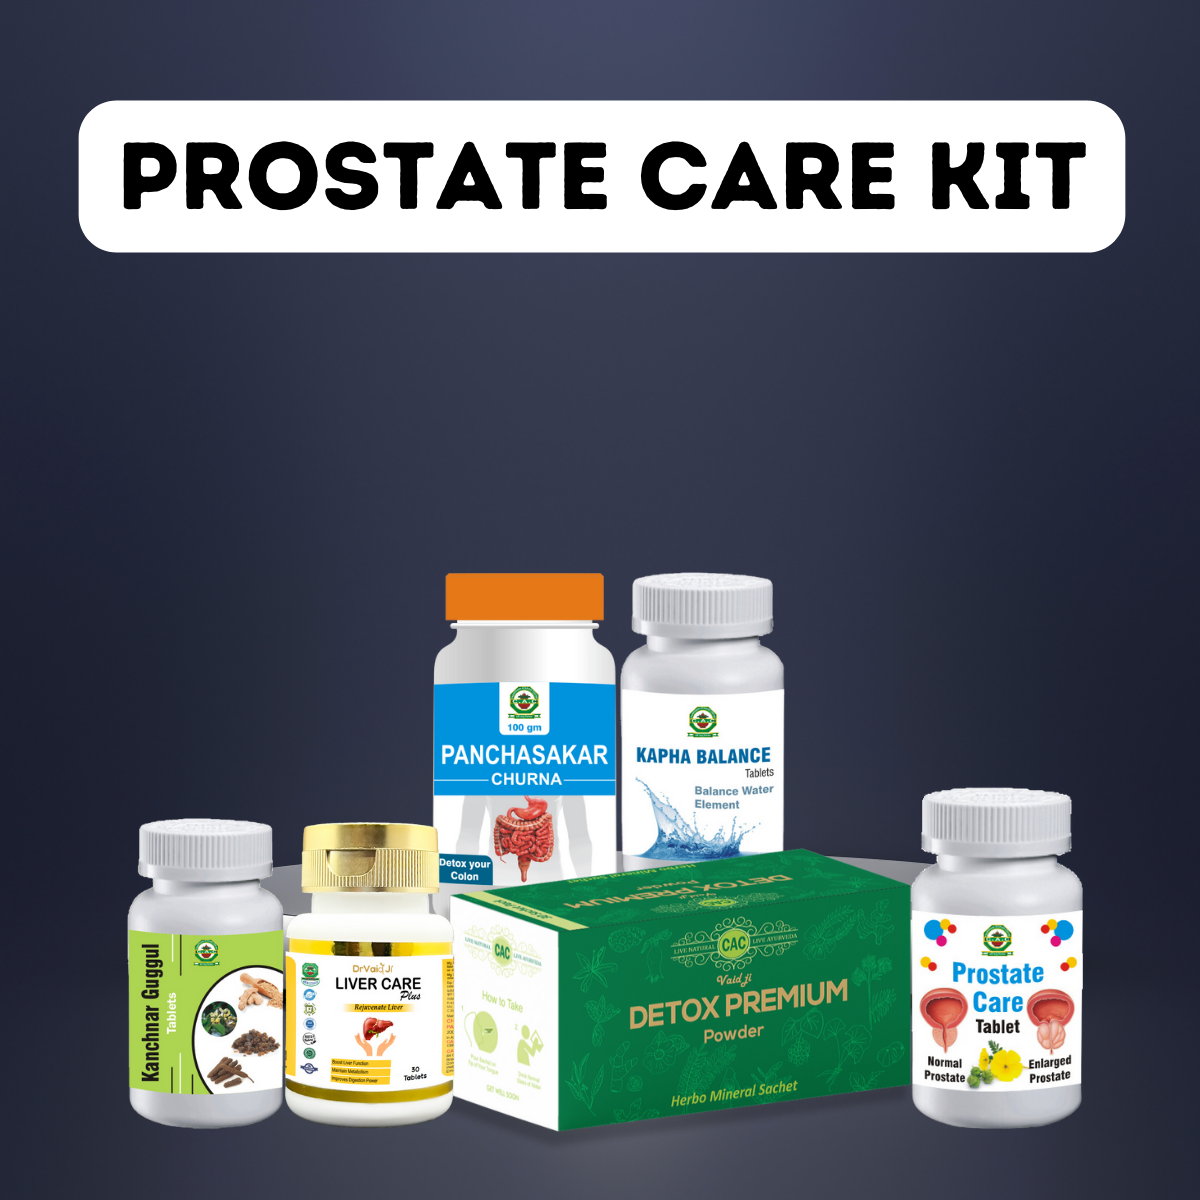 Prostate Care Kit